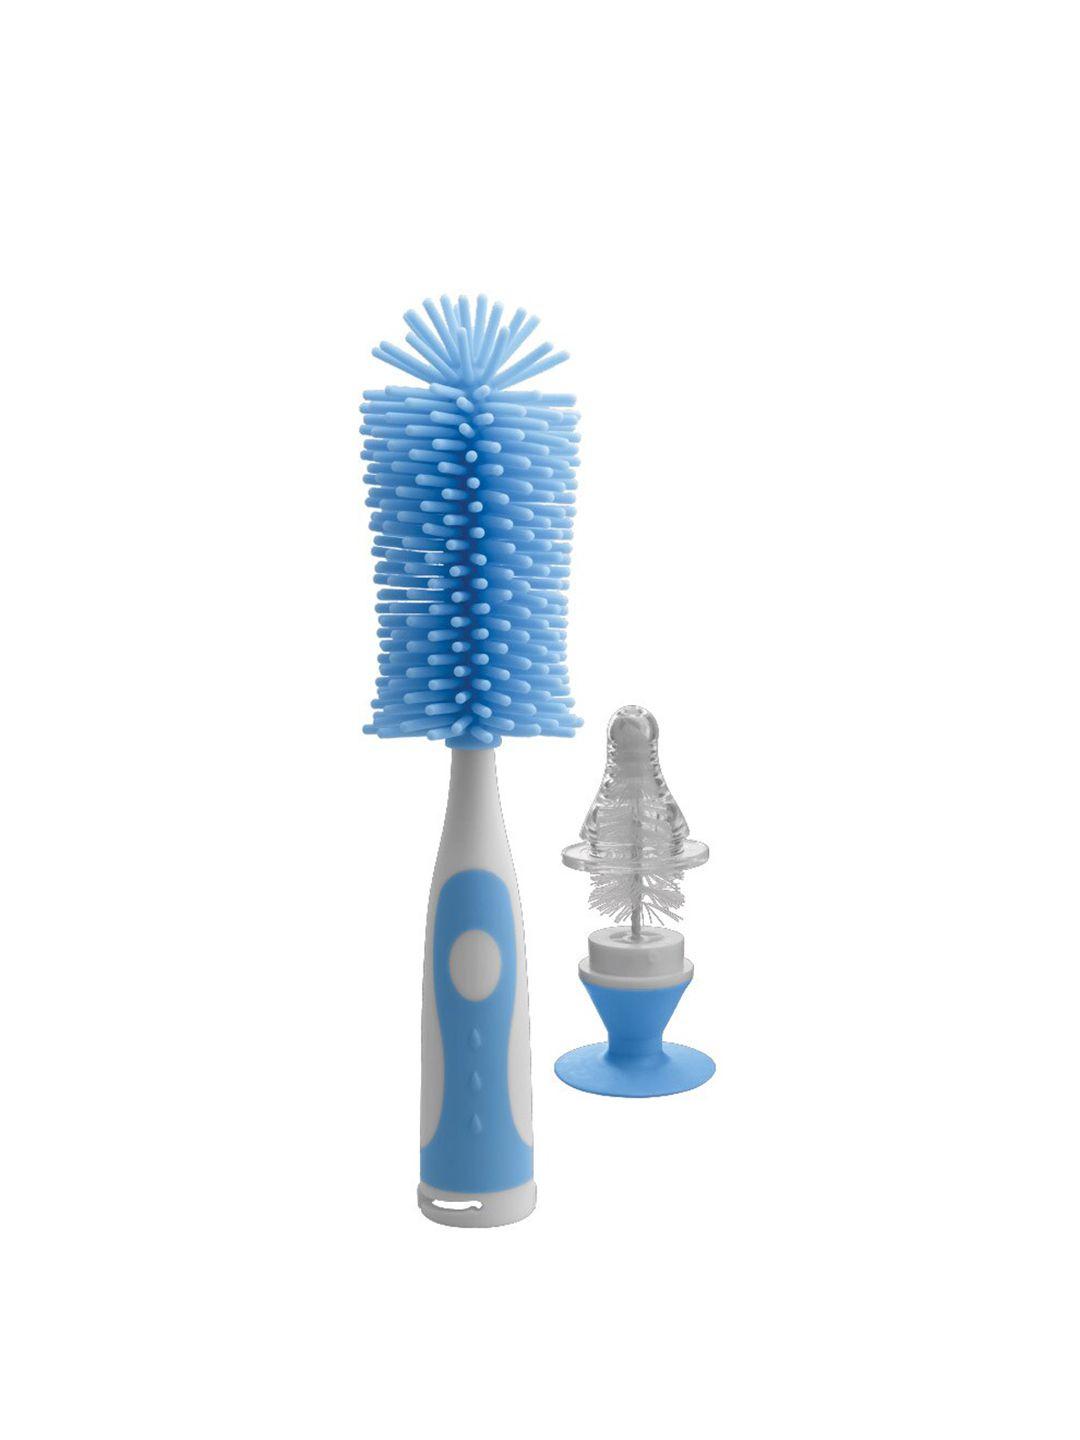 fisher-price blue silicone bottle brush set for baby feeding bottle and nipple